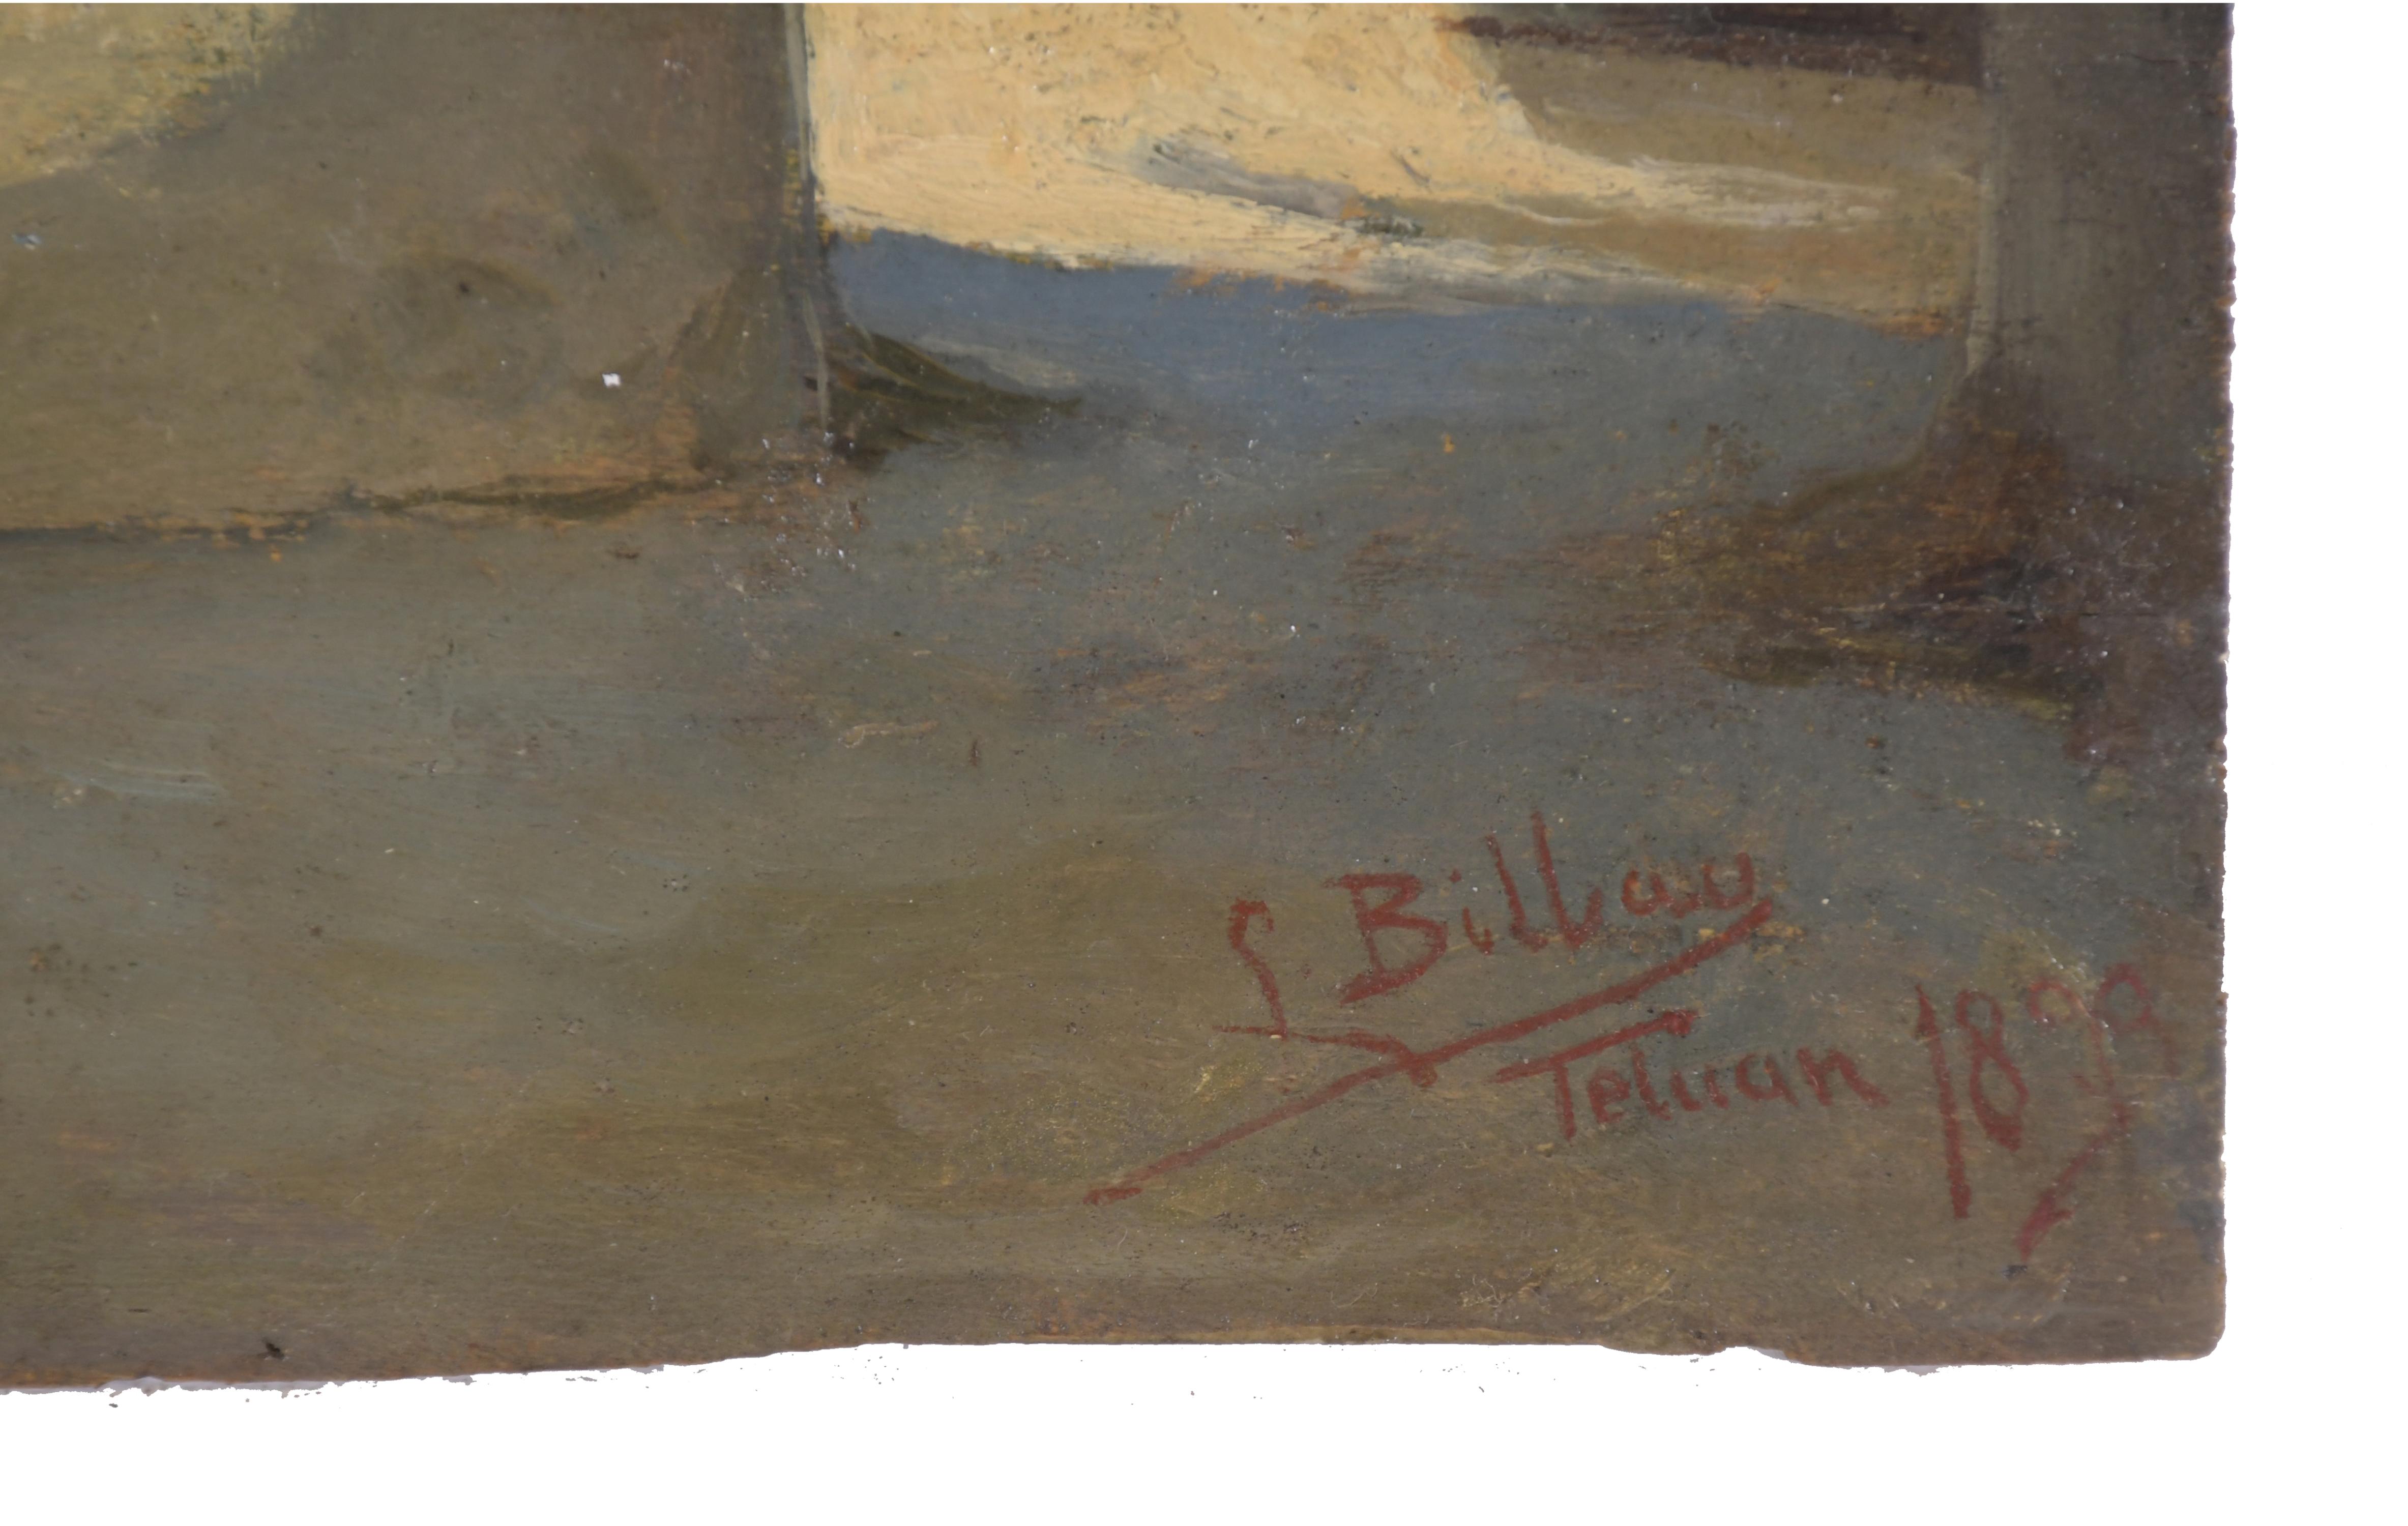 GONZALO BILBAO (1860-1938).  "TETUAN", 1898-99?.